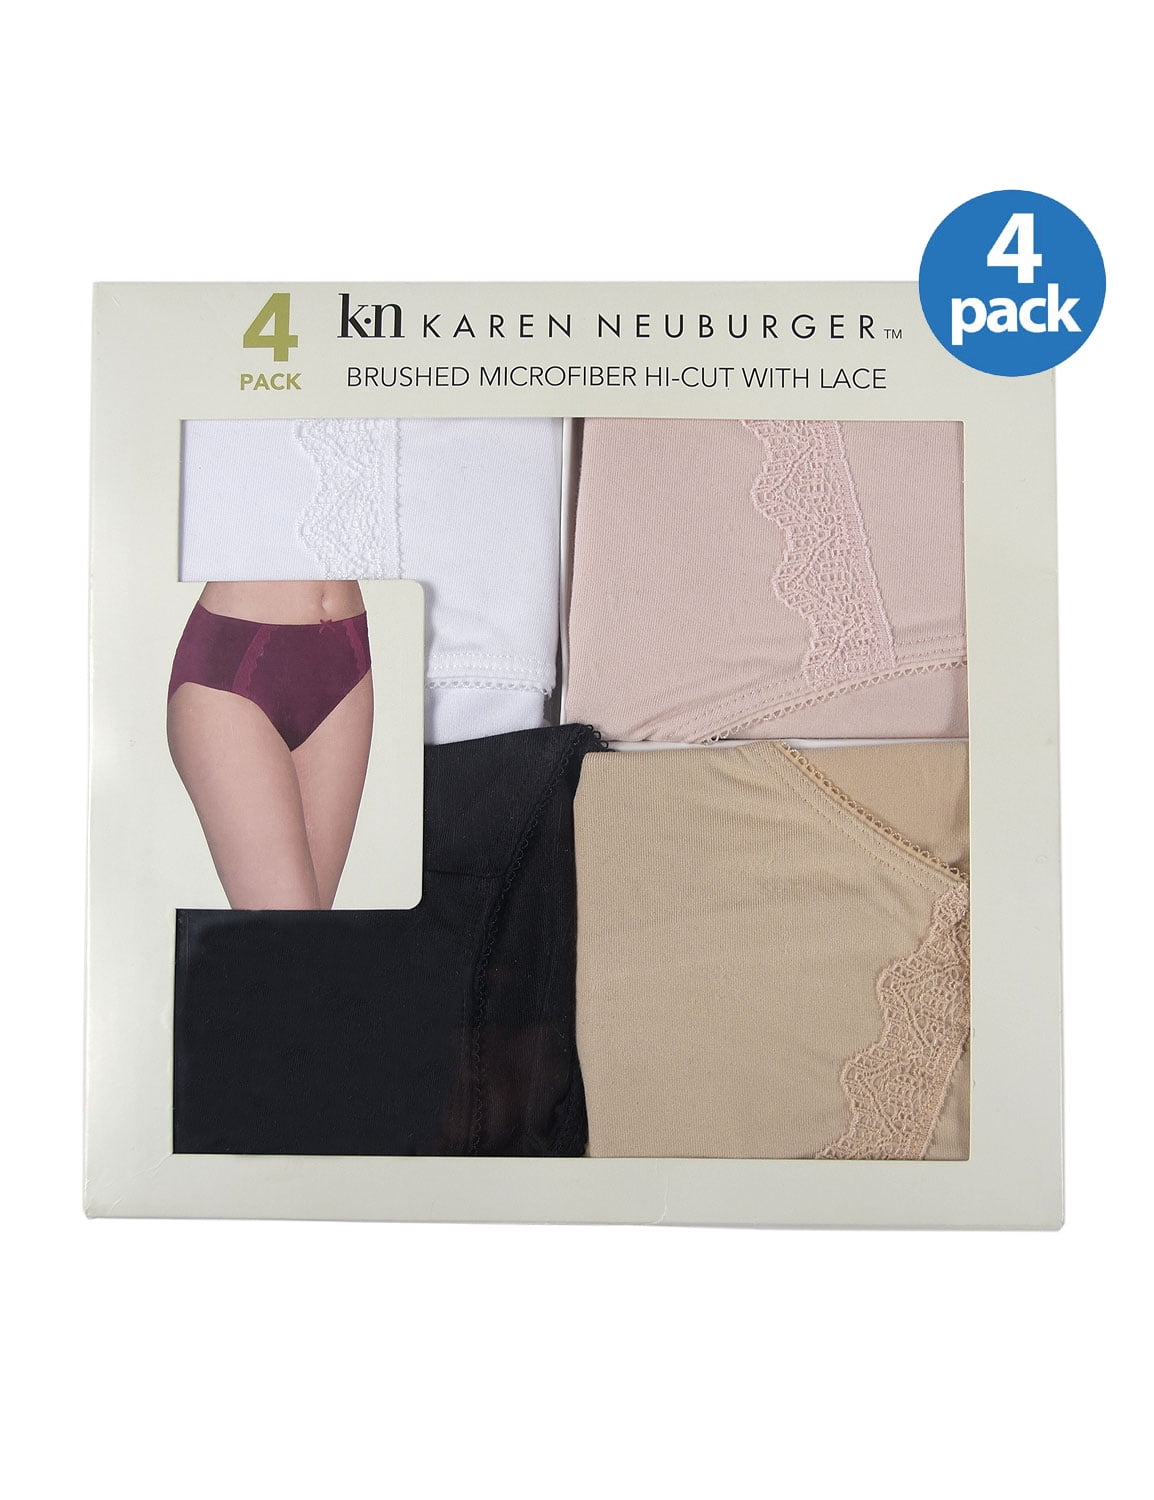 Karen Neuburger Women's Hi-Cut Brushed Microfiber Lace Briefs 4 Pack 